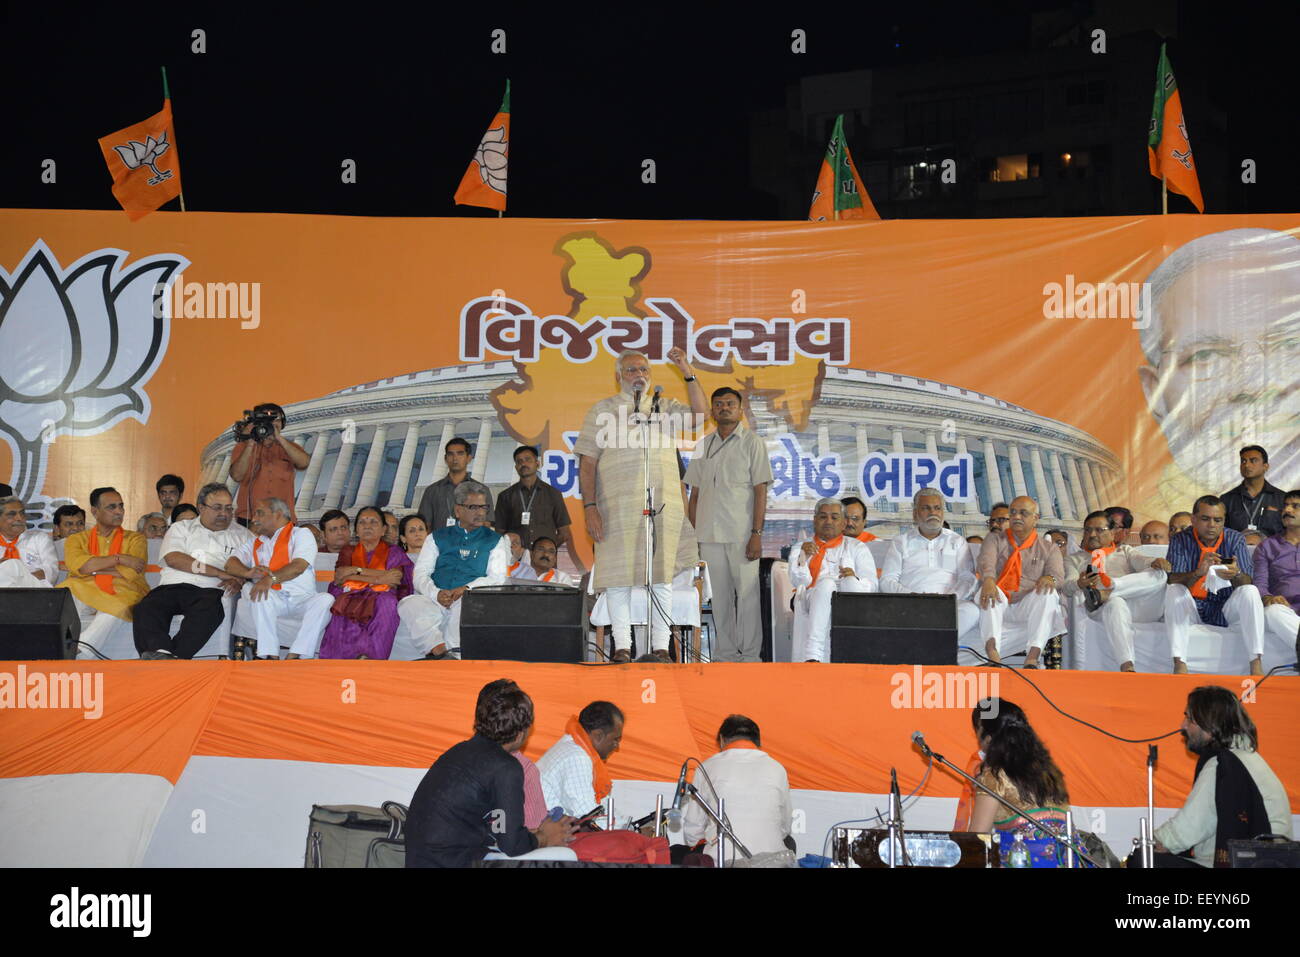 AHMEDABAD, GUJARAT/INDIA - 16 MAY 2014 :Prime Minister Narandra Modi addressing Vijayutsav rally after winning a thumping majority in Lok Sabha polls at Dharnidhar on May 16, 2014 in Ahmedabad, India. Stock Photo